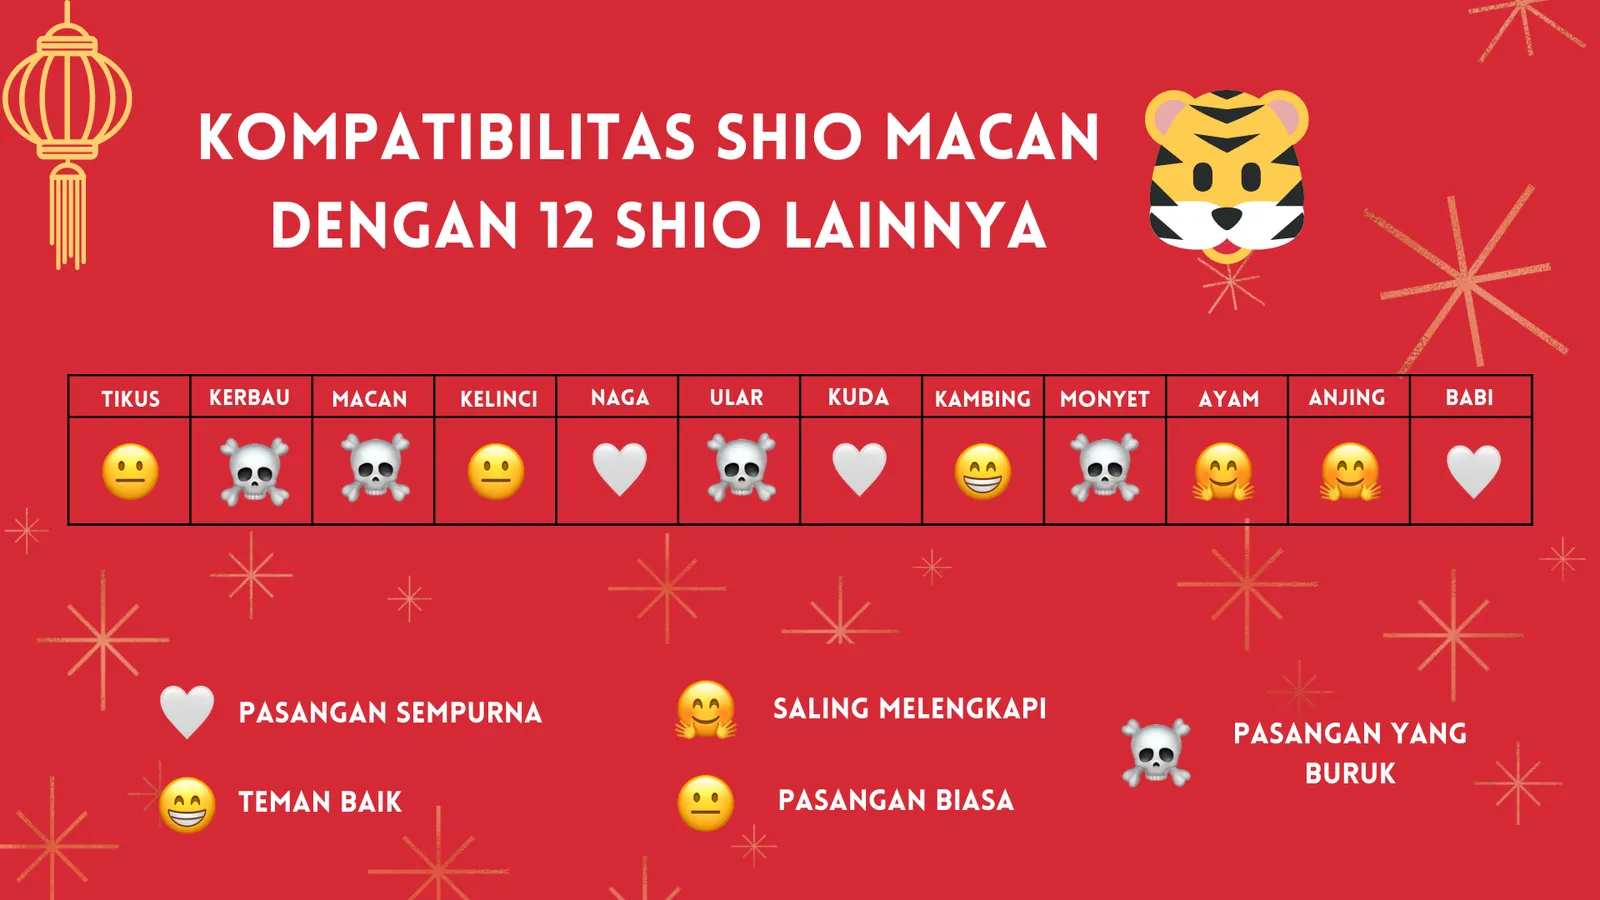 Karakteristik Shio Macan dalam Percintaan, Cocok Sama Siapa Ya?